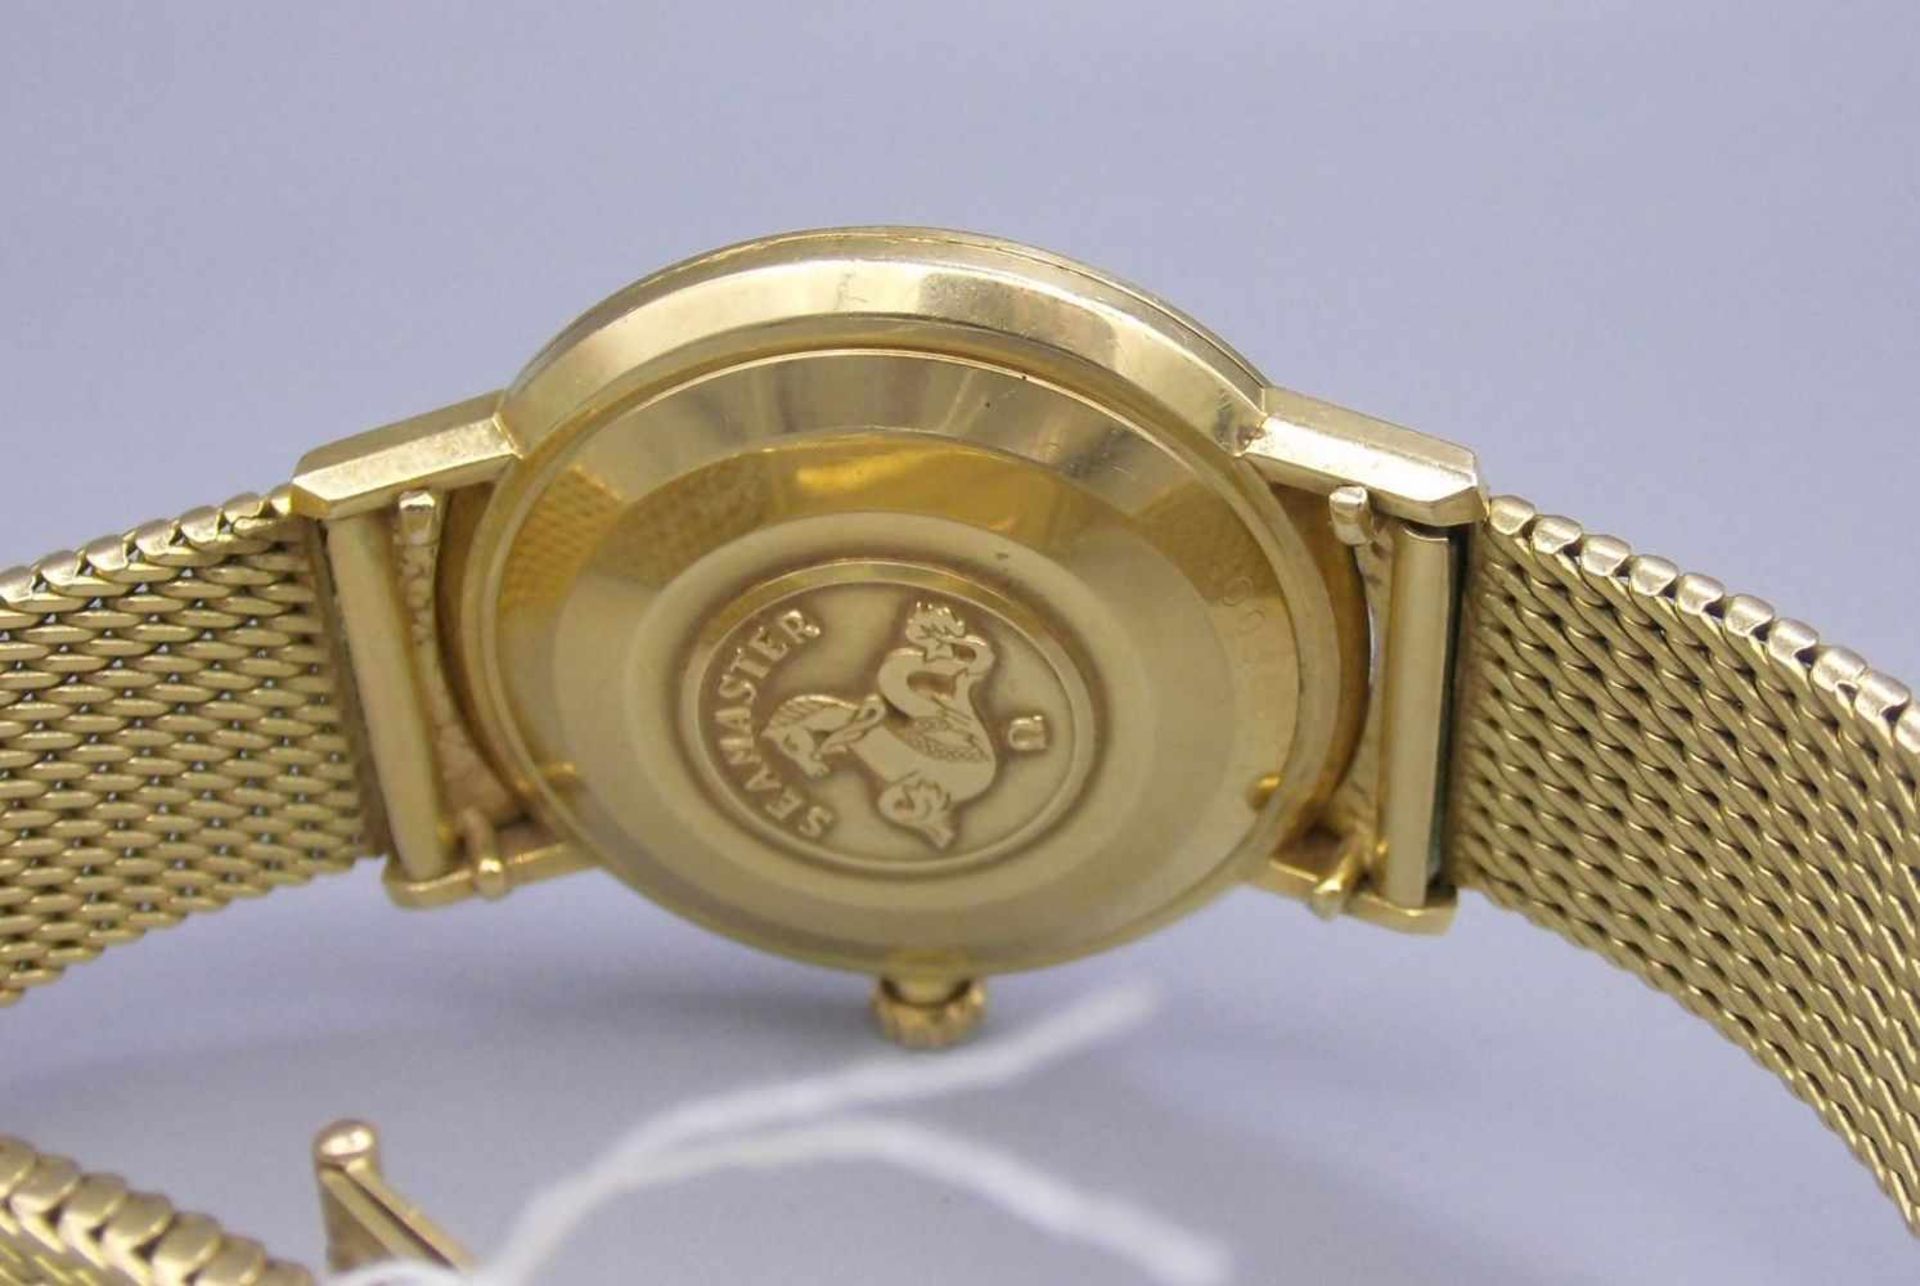 GOLDENE ARMBANDUHR / wristwatch, Automatik-Uhr, Manufaktur Omega, Modell "Seamaster De Ville". - Image 5 of 7